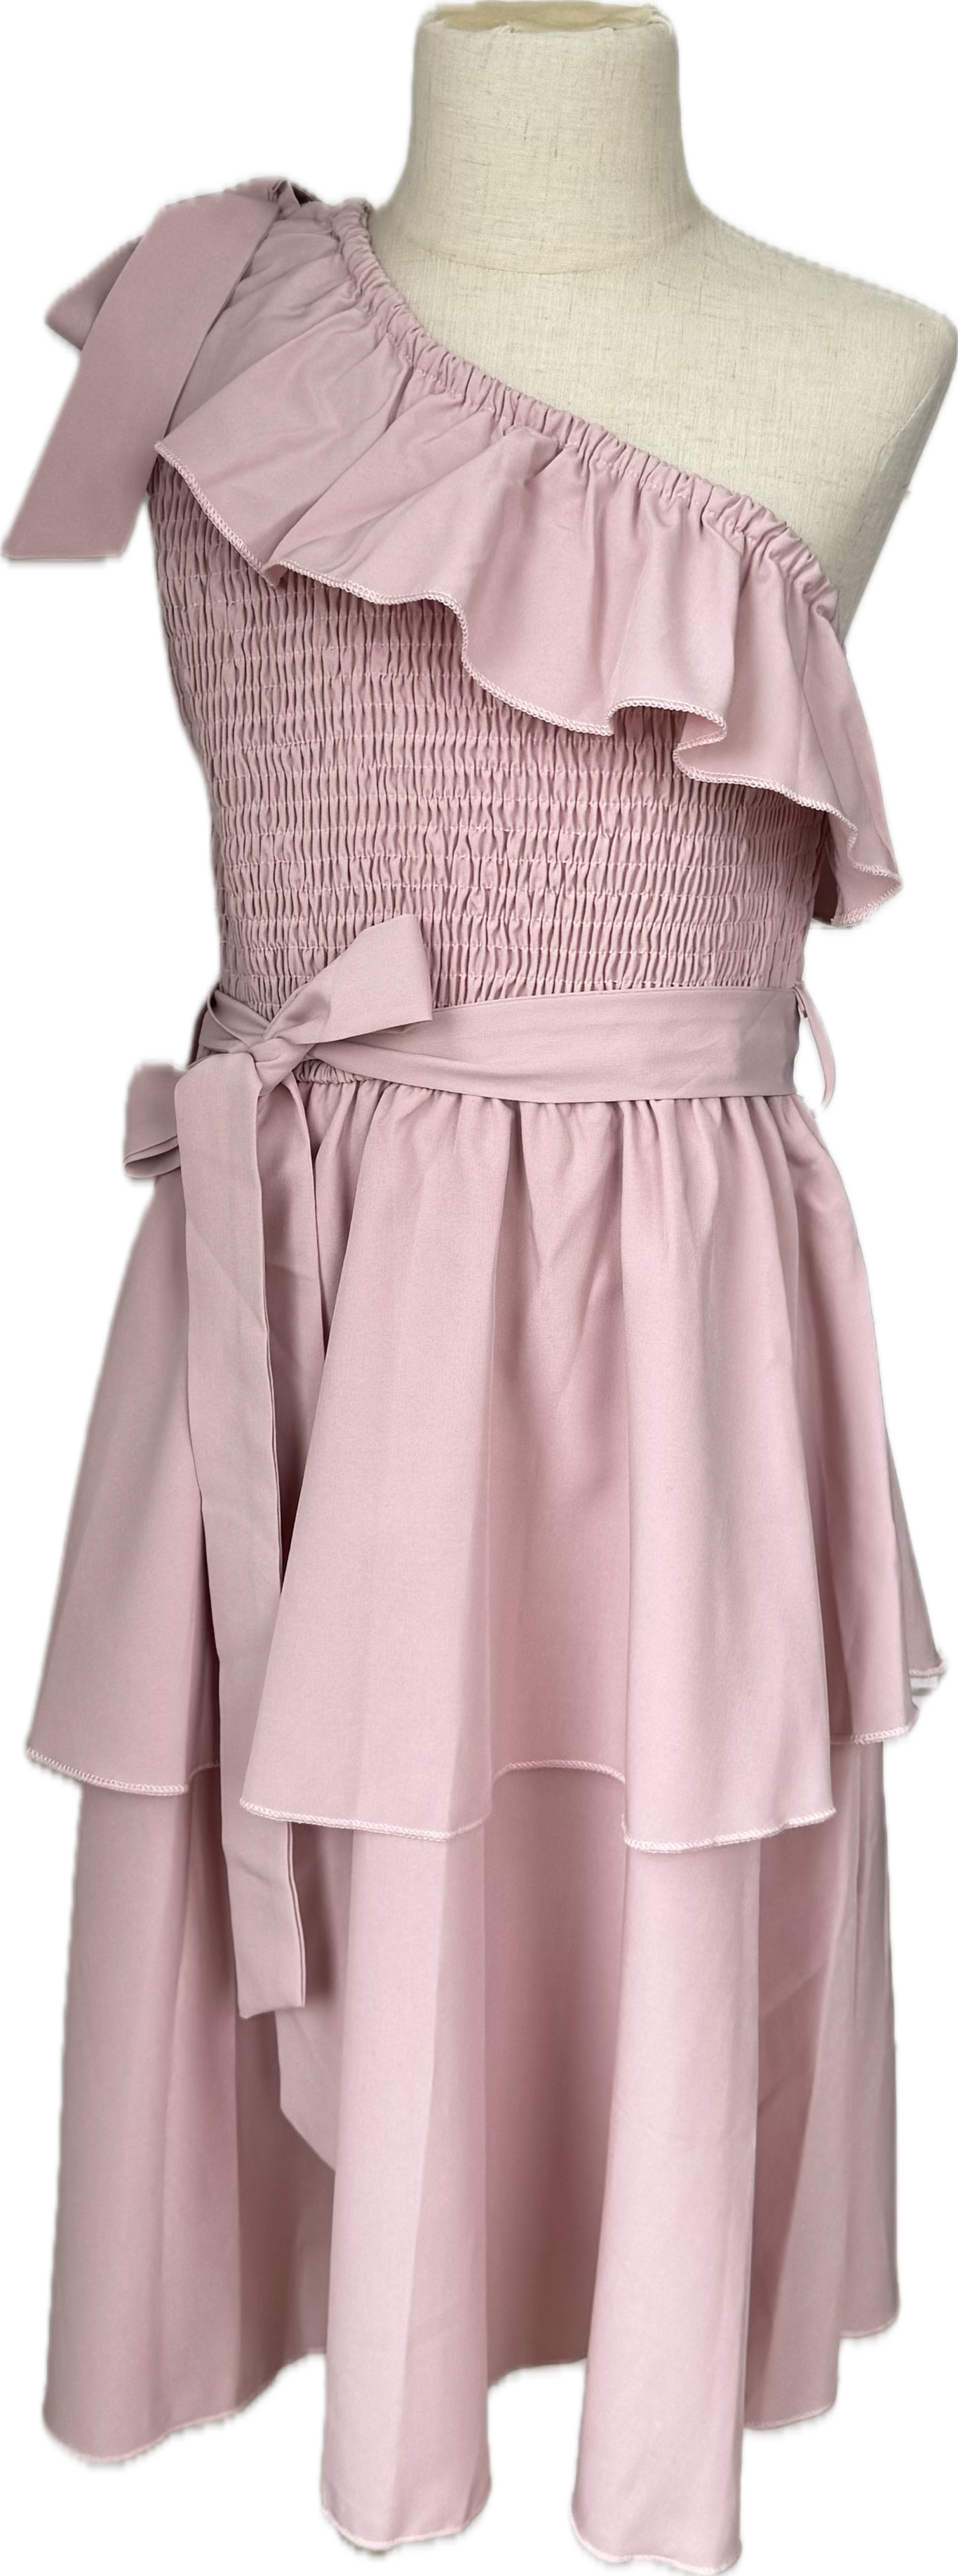 Belle Danna NWT Smocked Ruffle Dress, Dusty Rose Girls Size 12